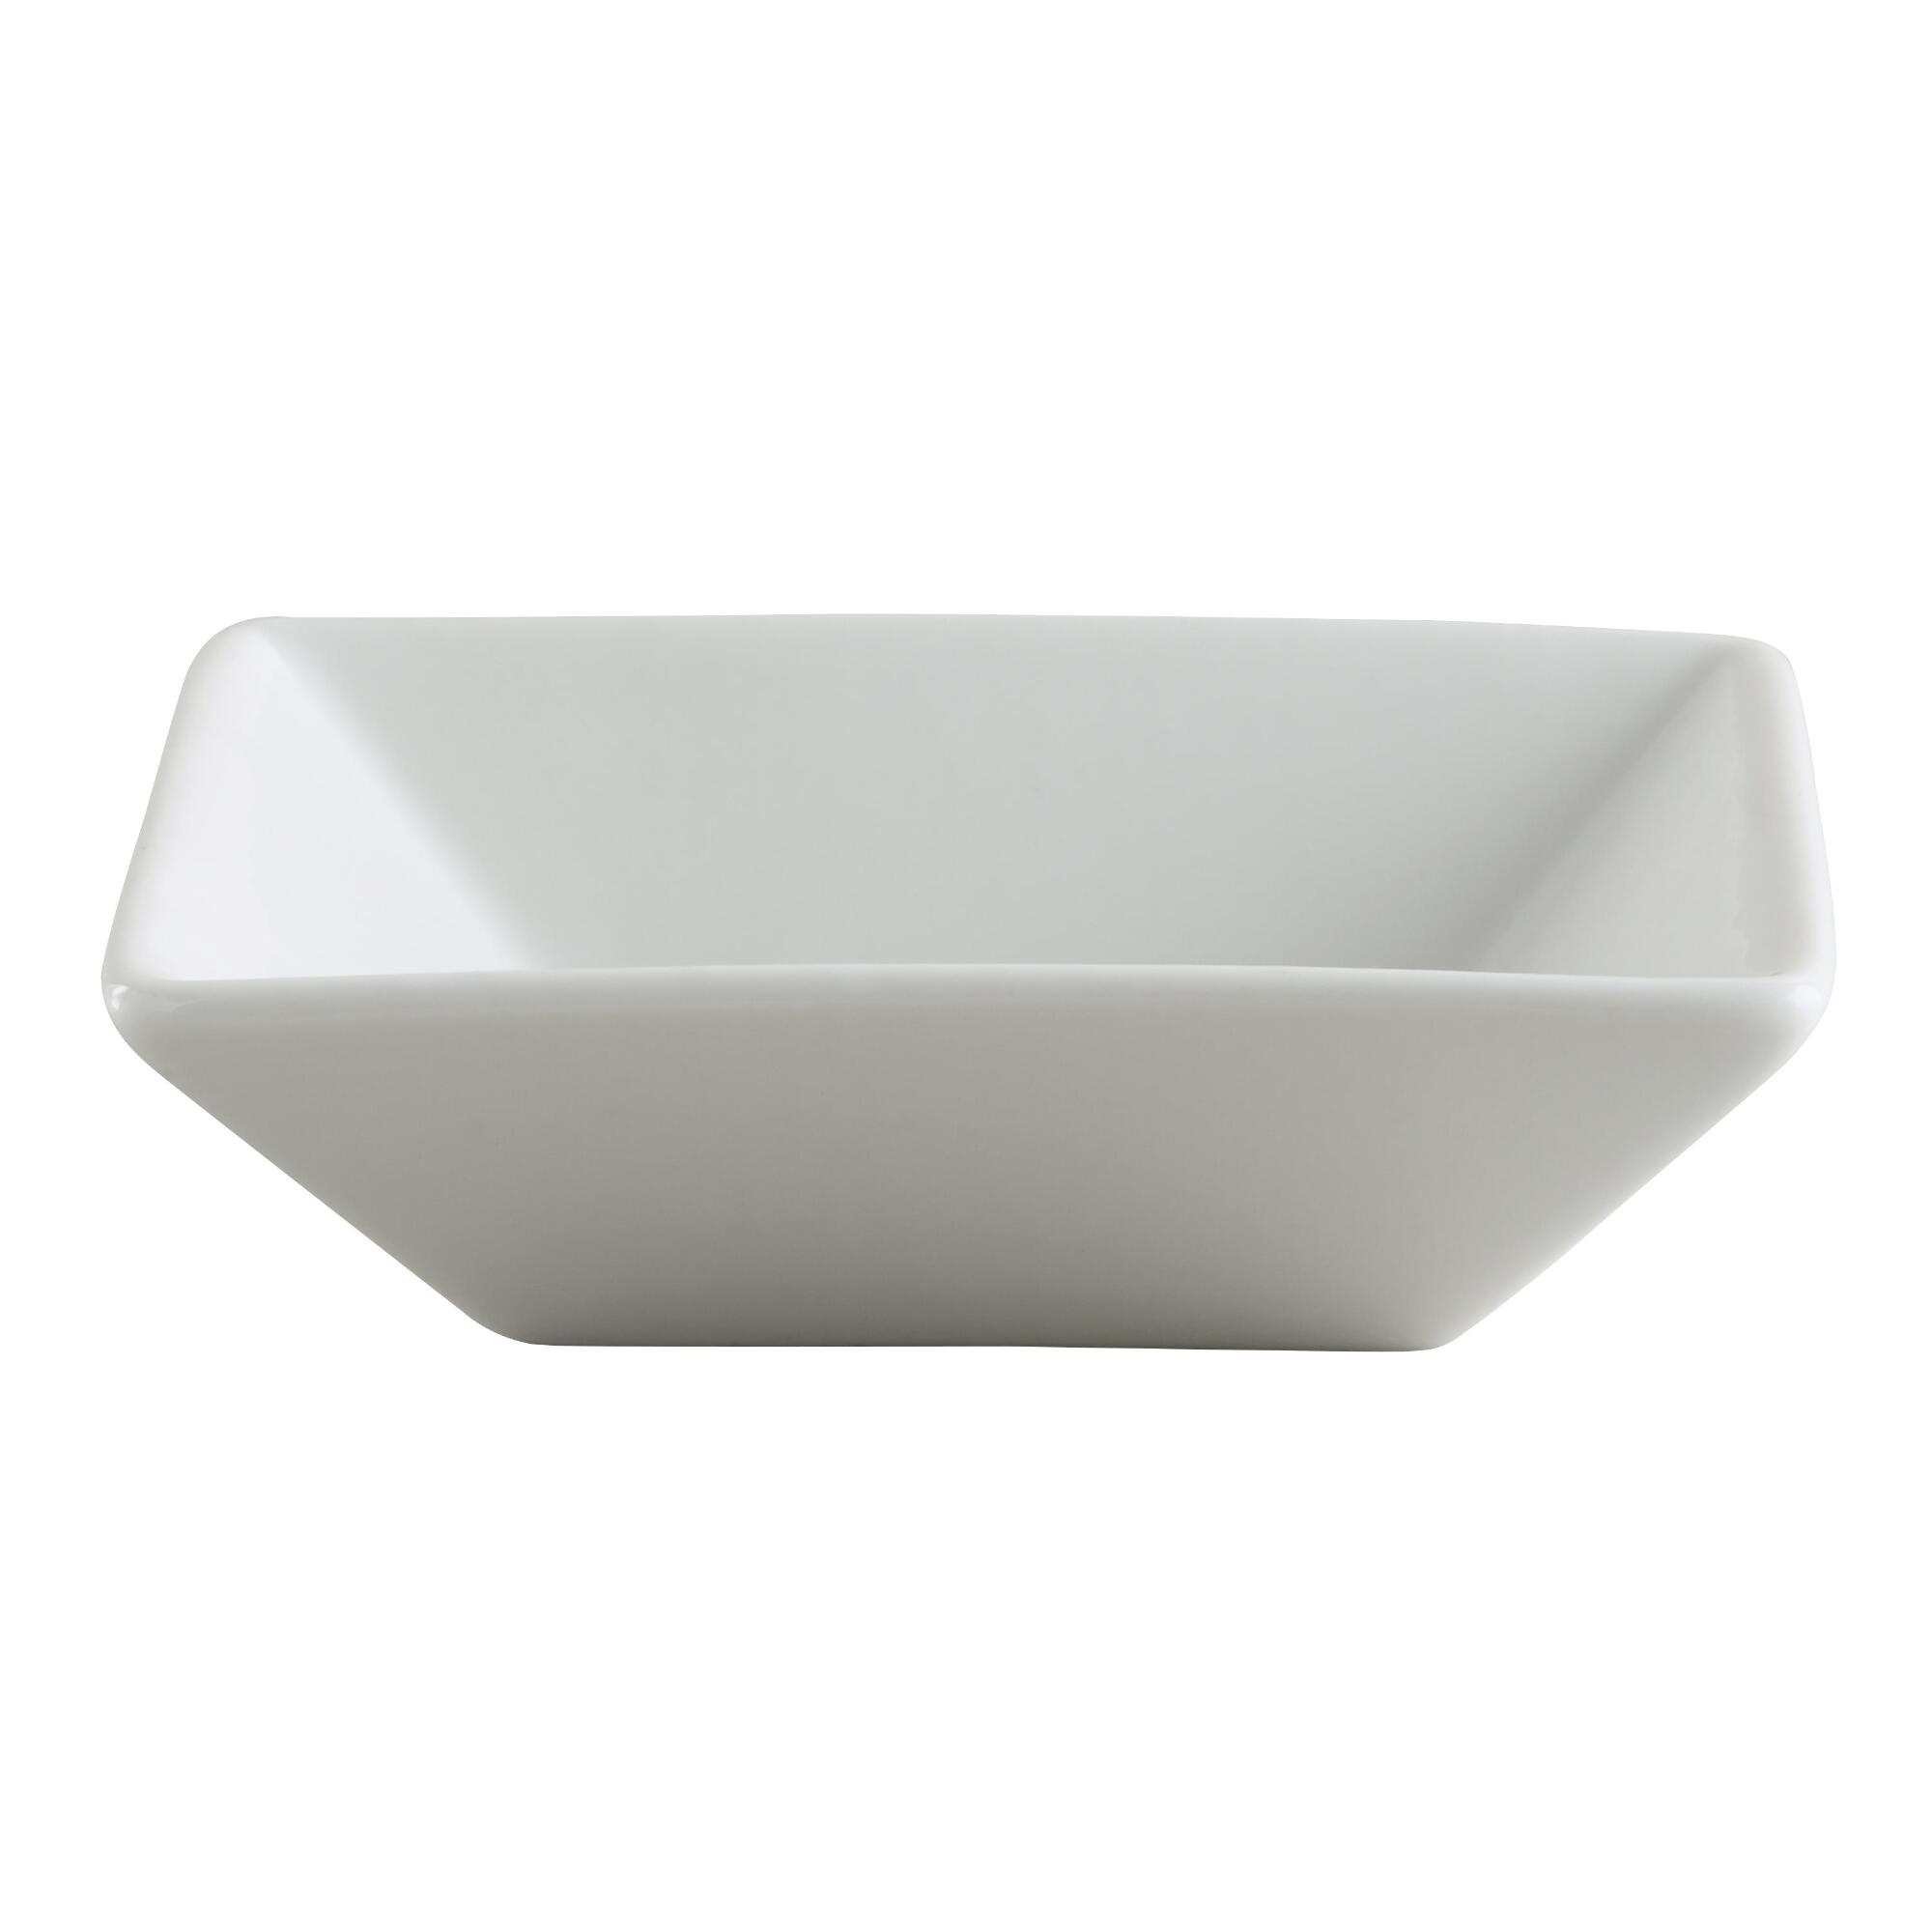 White Porcelain Square Tasting Dishes, Set of 6 by World Market